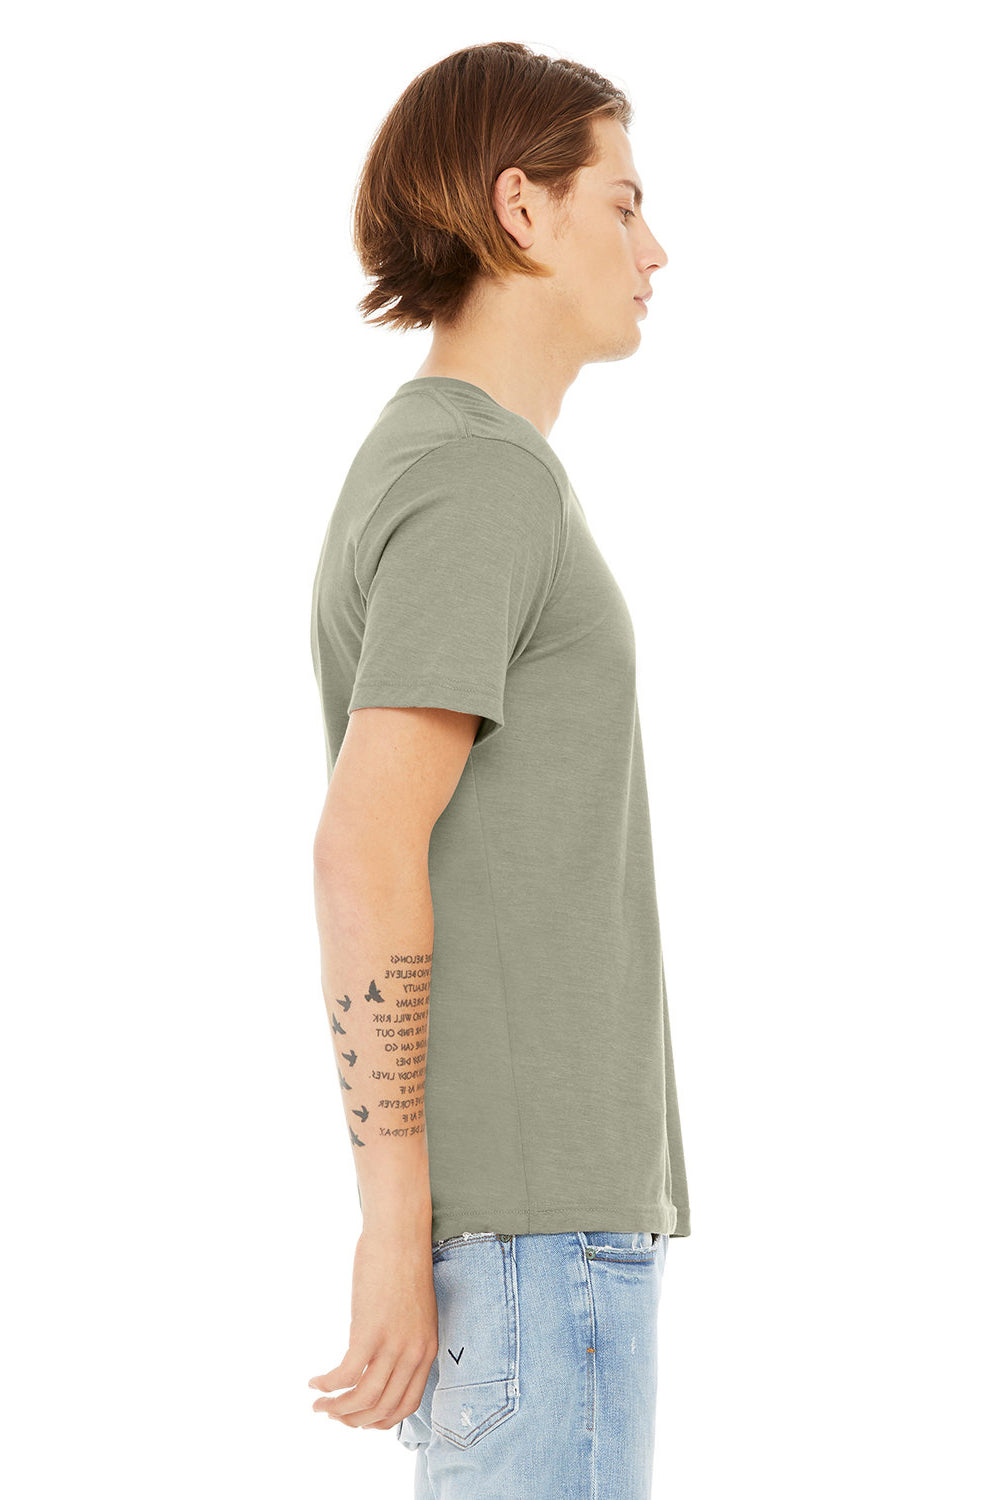 Bella + Canvas BC3005CVC Mens Jersey Short Sleeve V-Neck T-Shirt Heather Stone Model Side